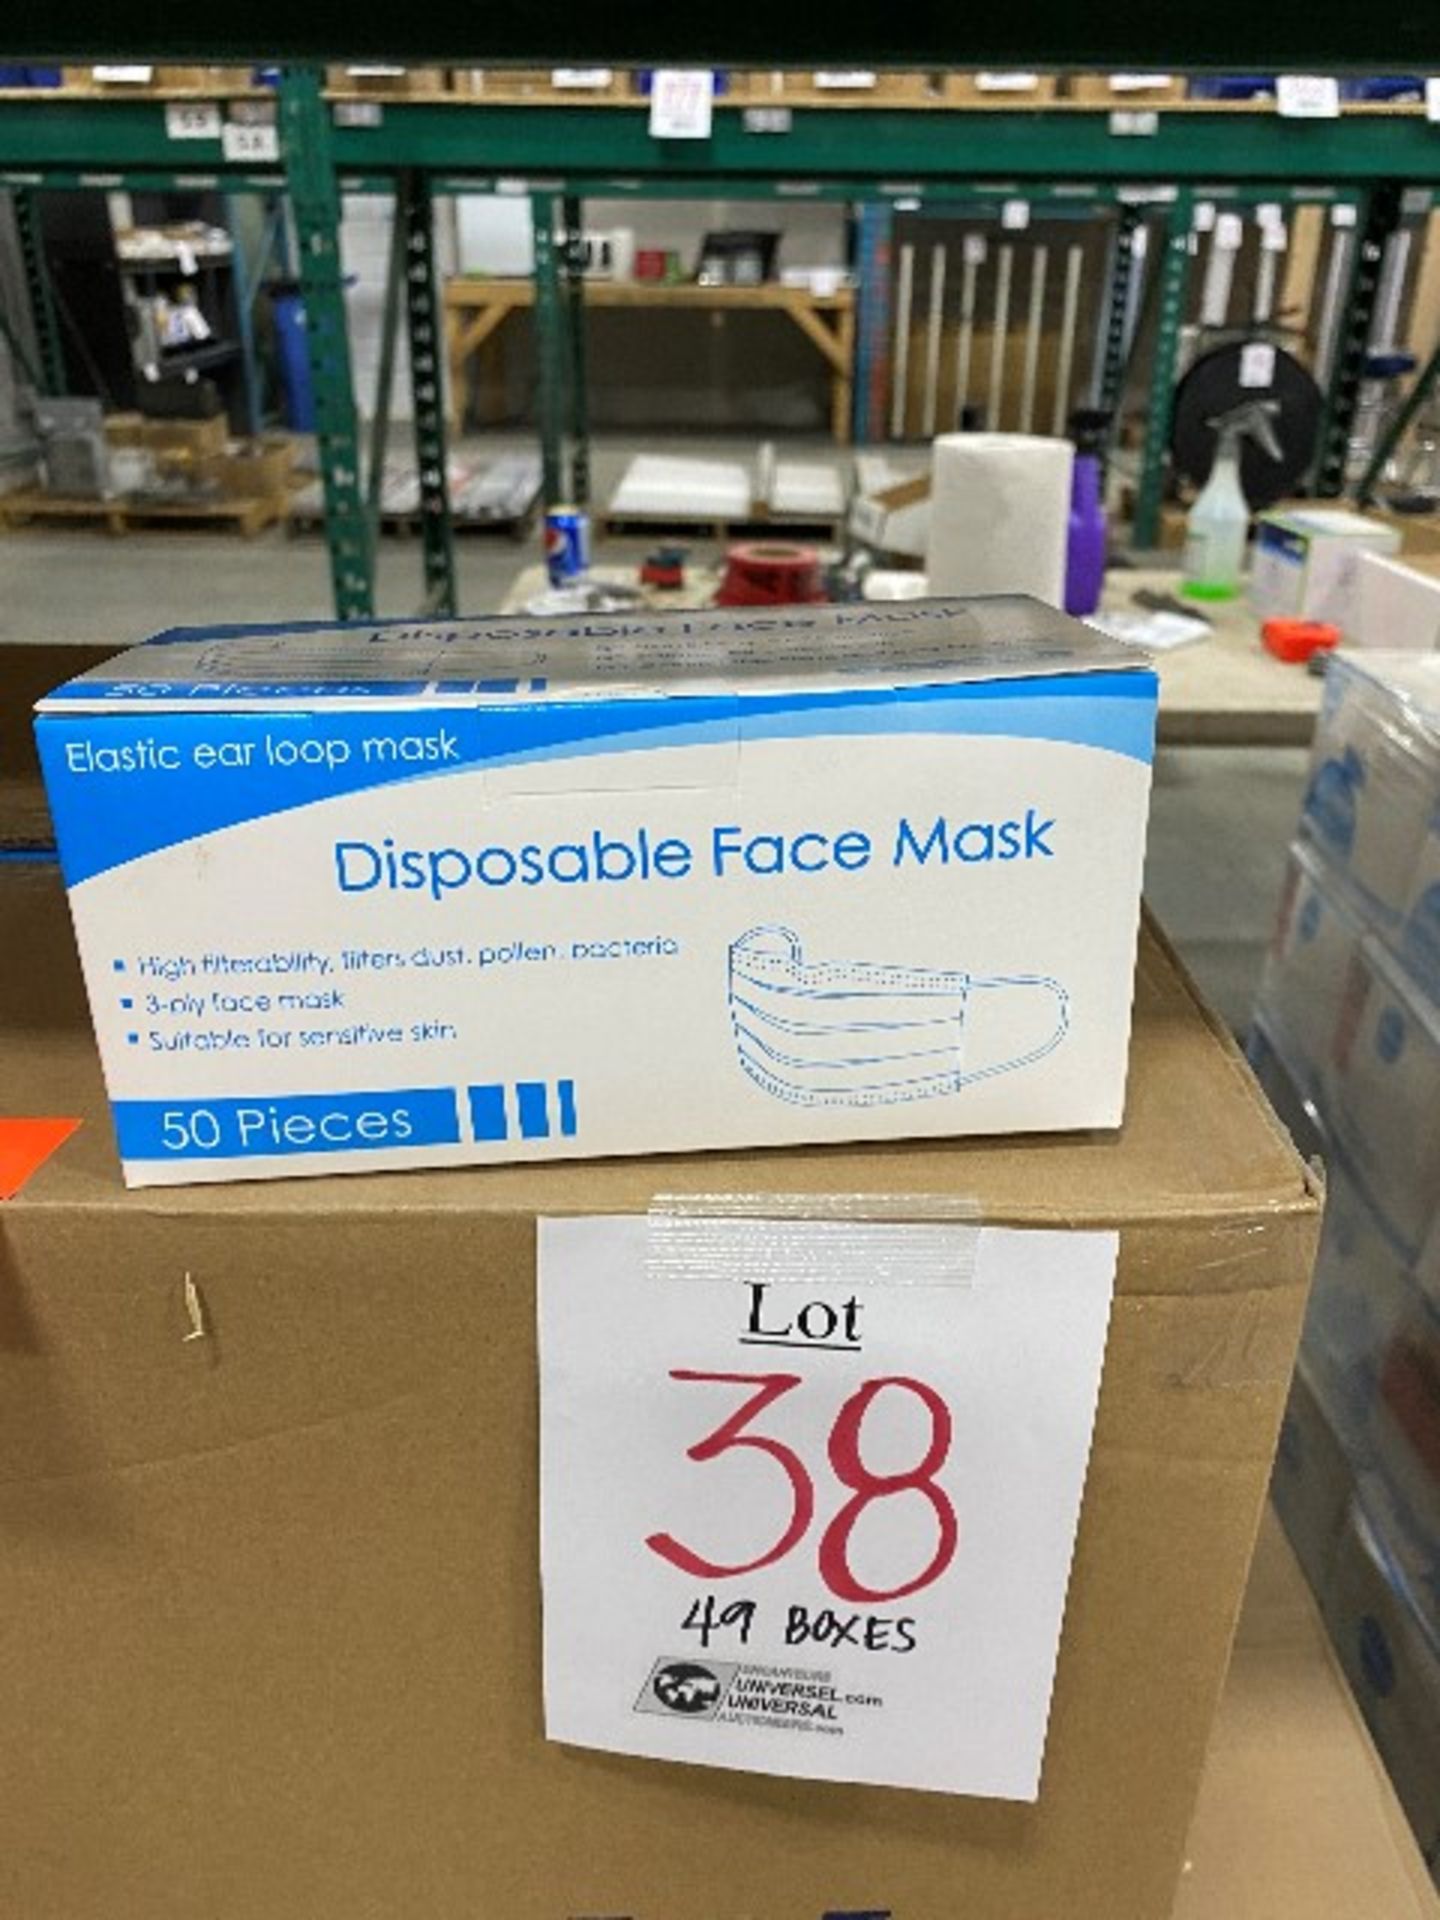 Disposable face mask, 3-ply, 50pcs per box, 49 boxes